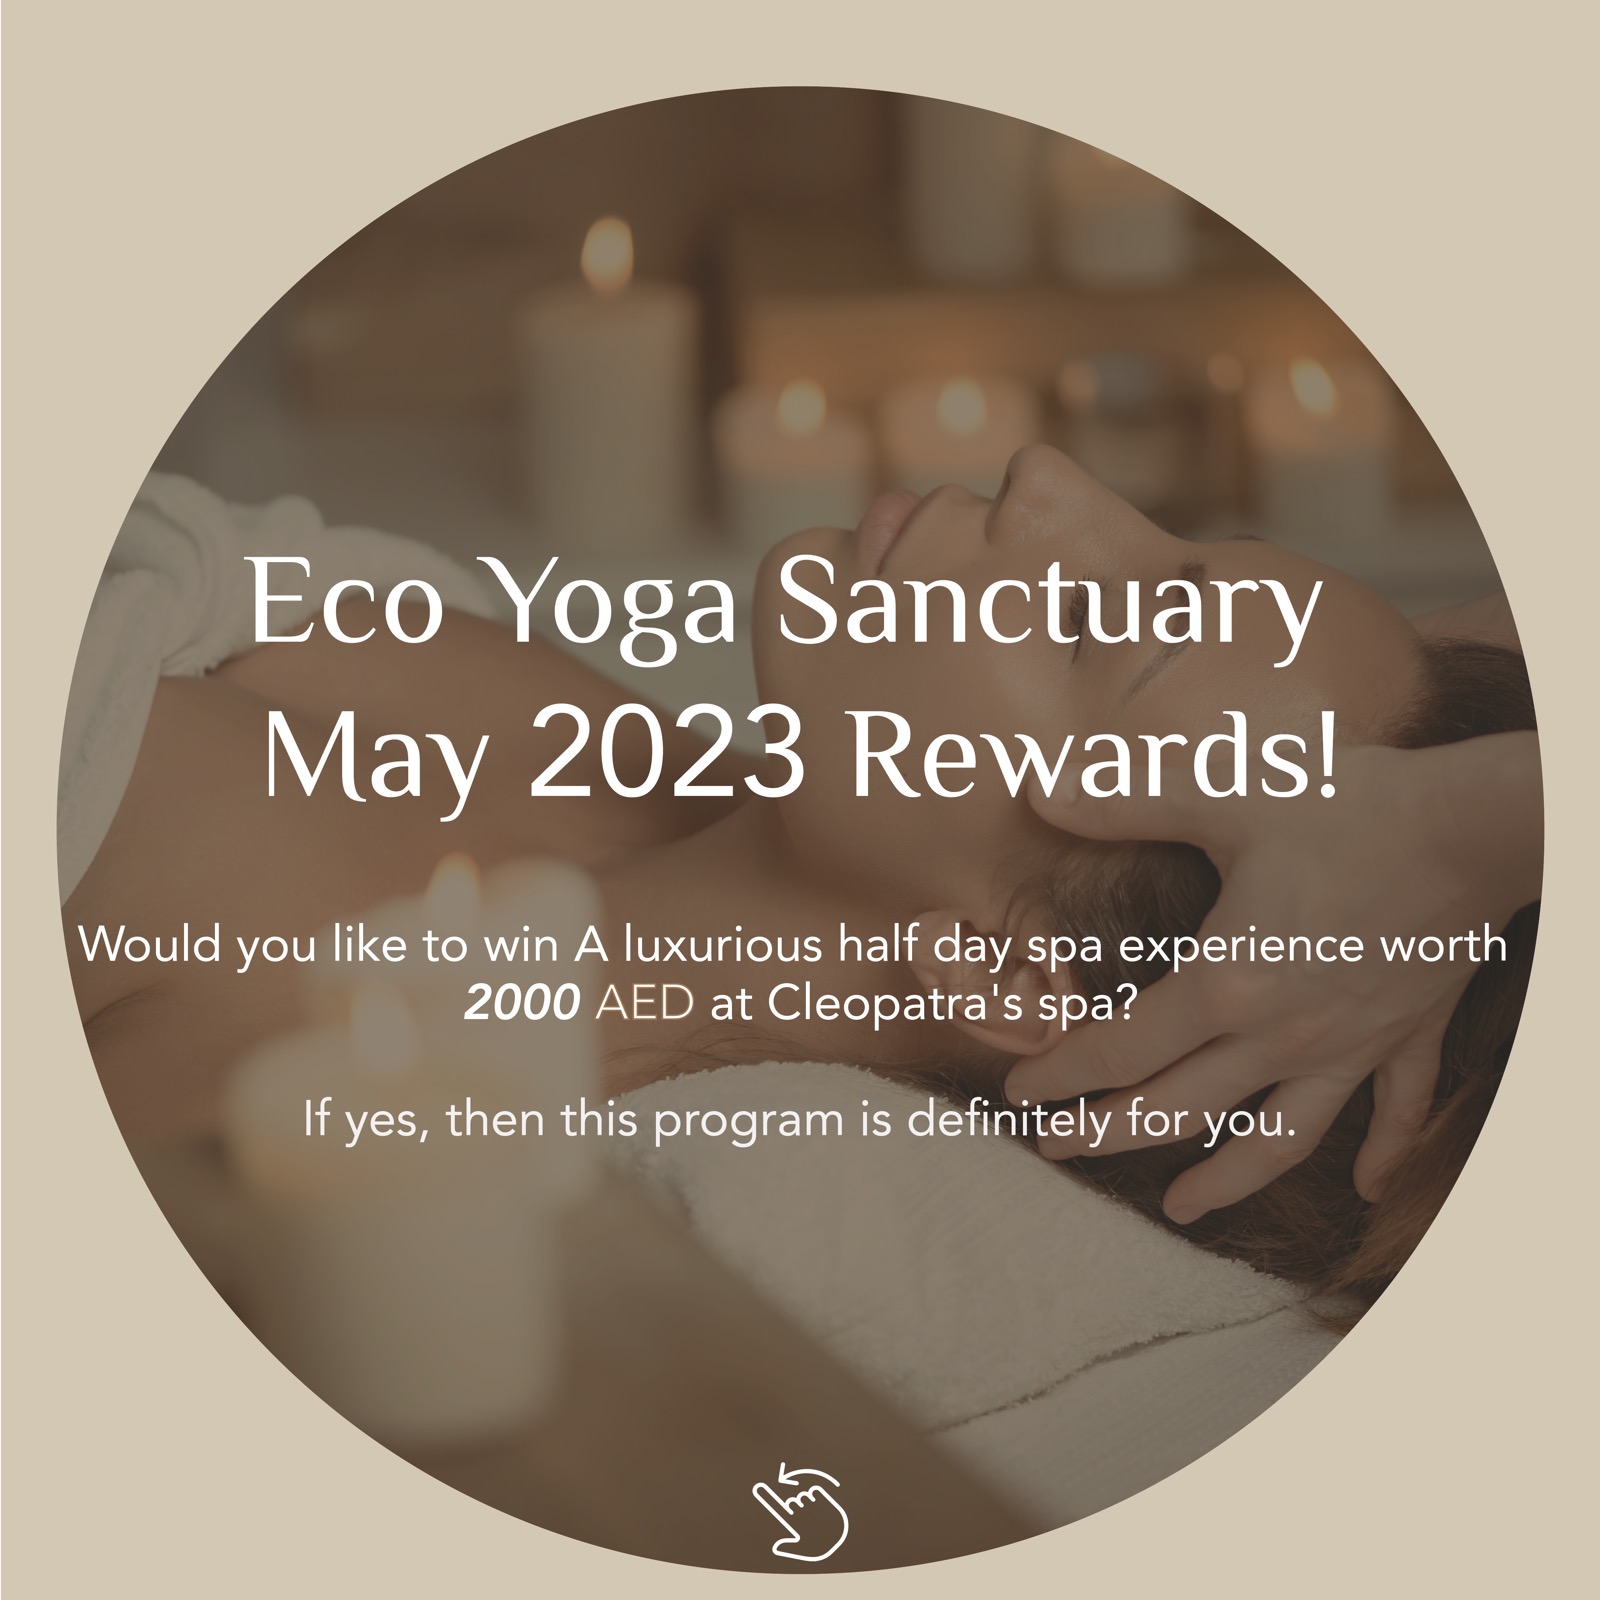 ECO YOGA SANCTUARY MAY 2023 REWARDS!